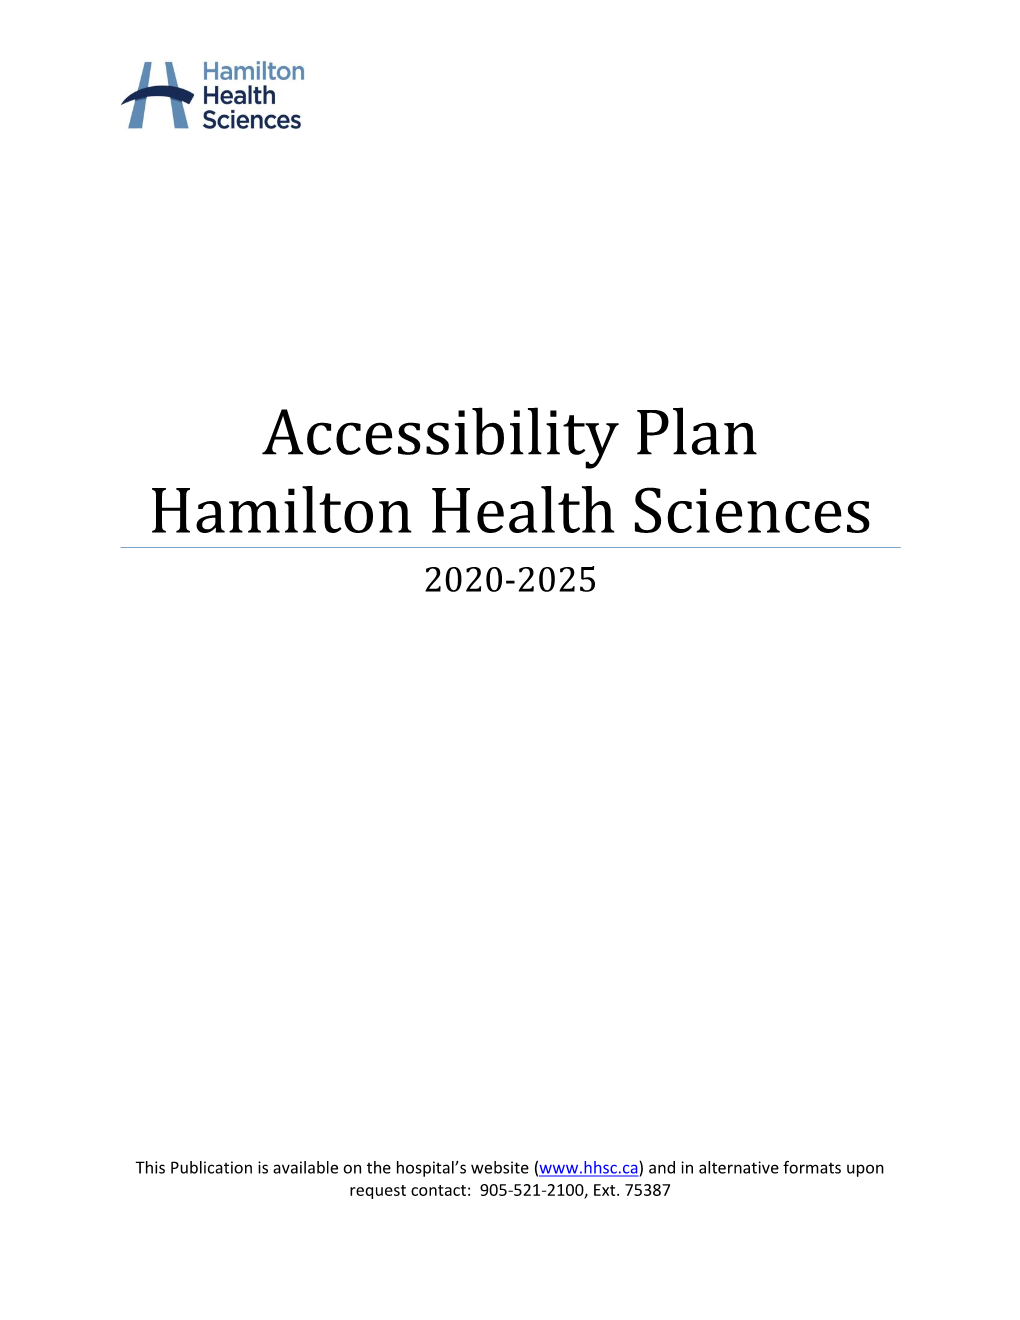 Annual Accessibility Plan for Hamilton Health Sciences